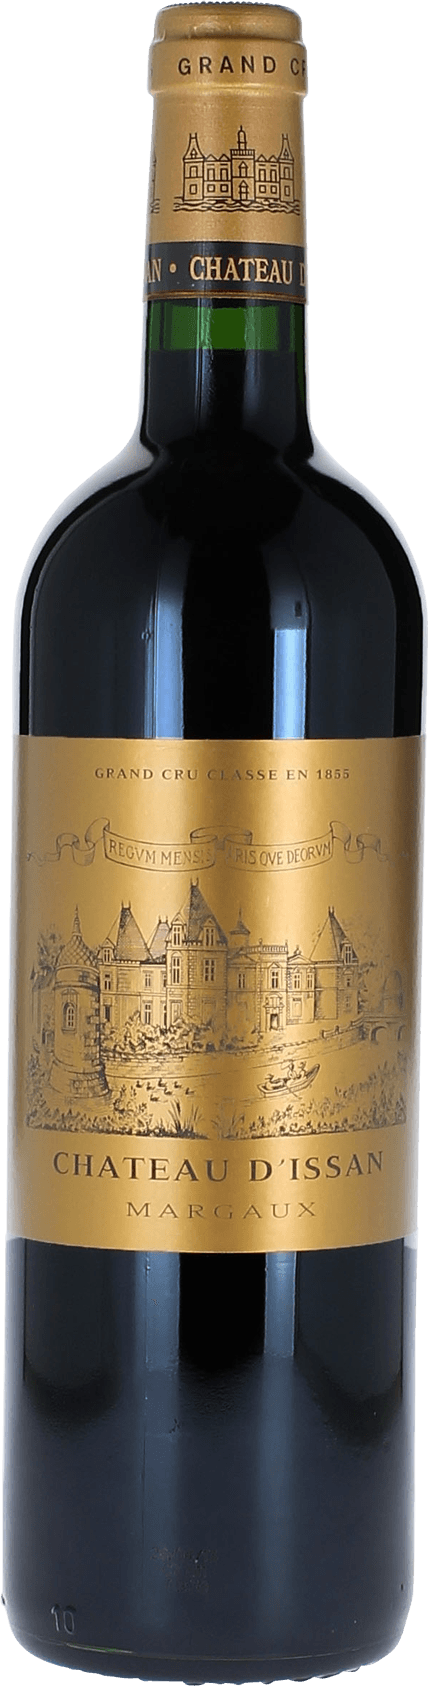 Issan 1995 3me Grand cru class Margaux, Bordeaux rouge